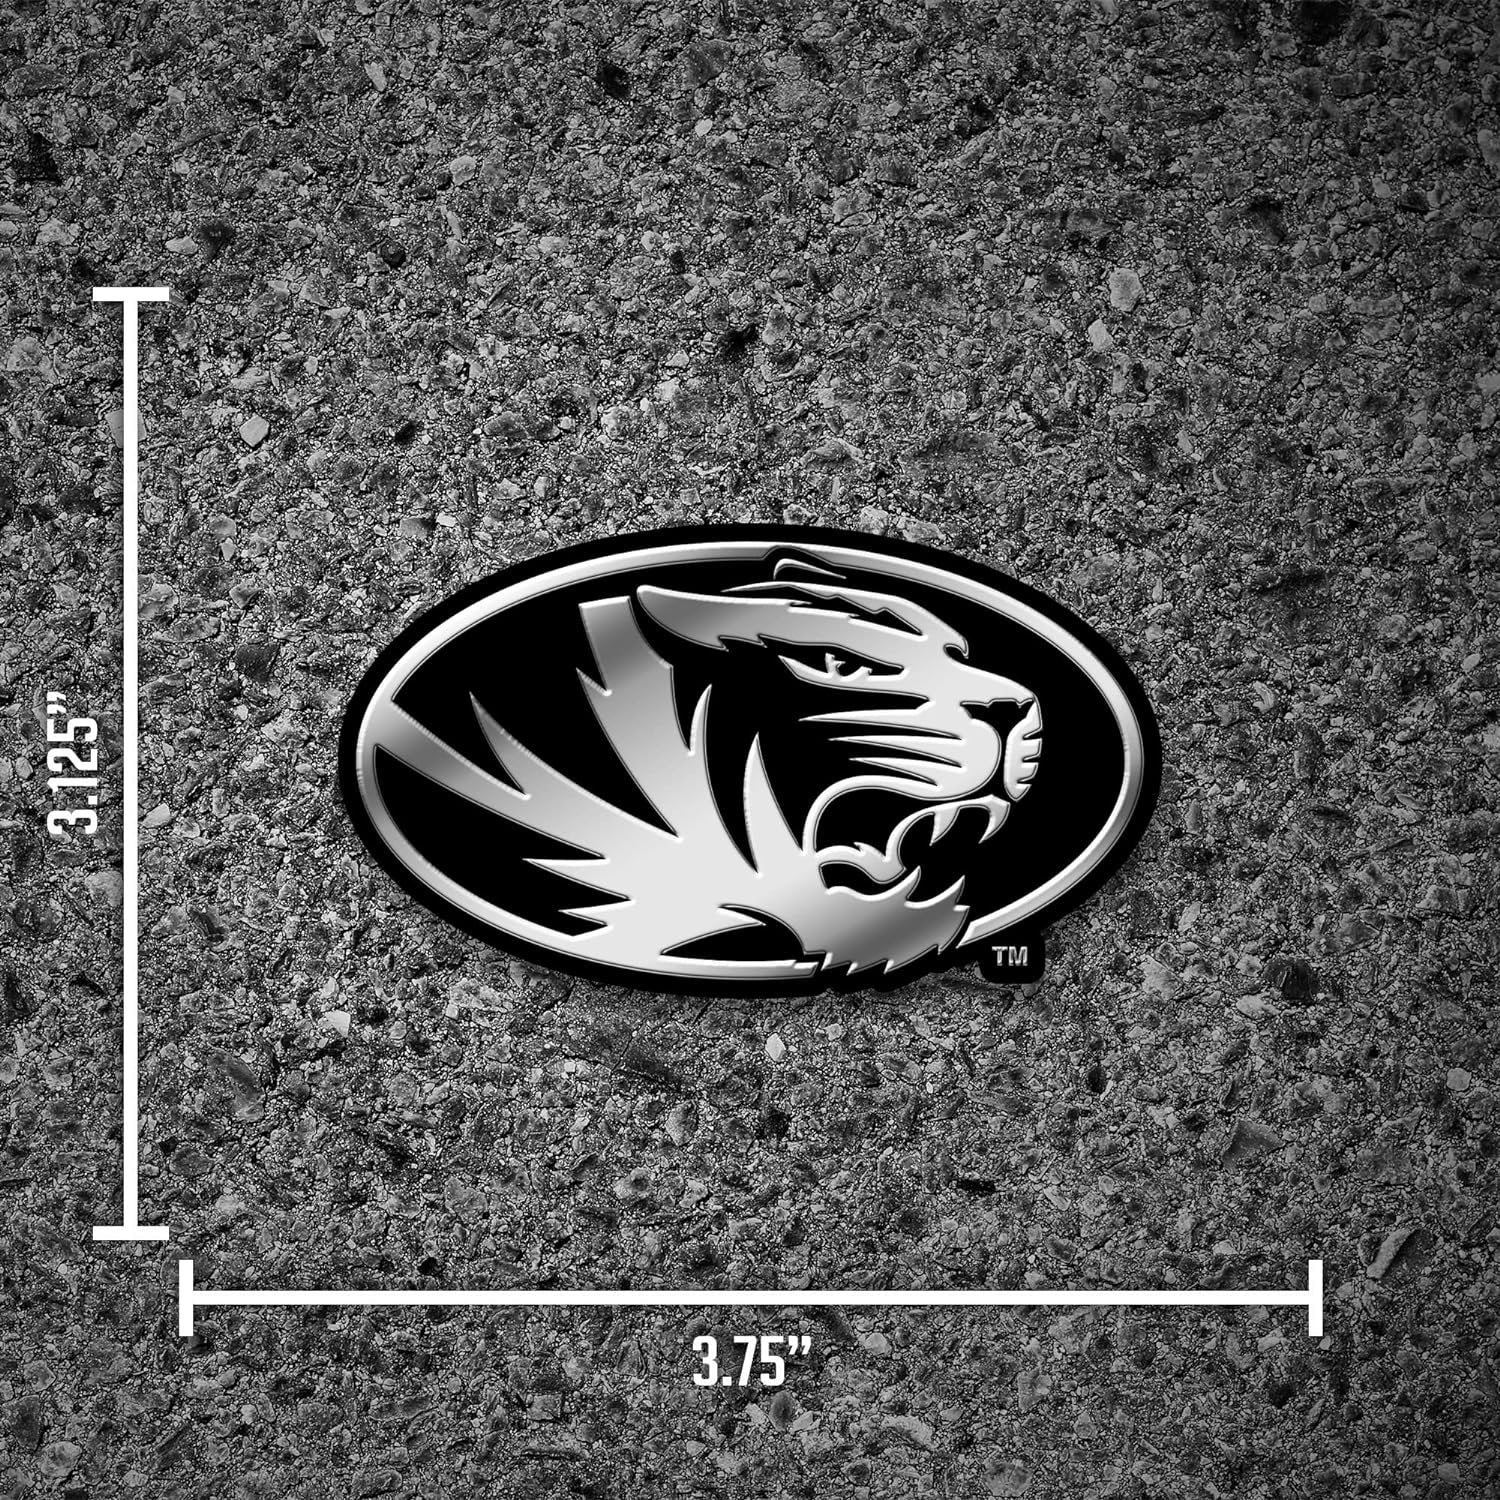 University of Missouri Tigers Auto Emblem, Silver Chrome Color, Raised Molded Plastic, 3.5 Inch, Adhesive Tape Backing